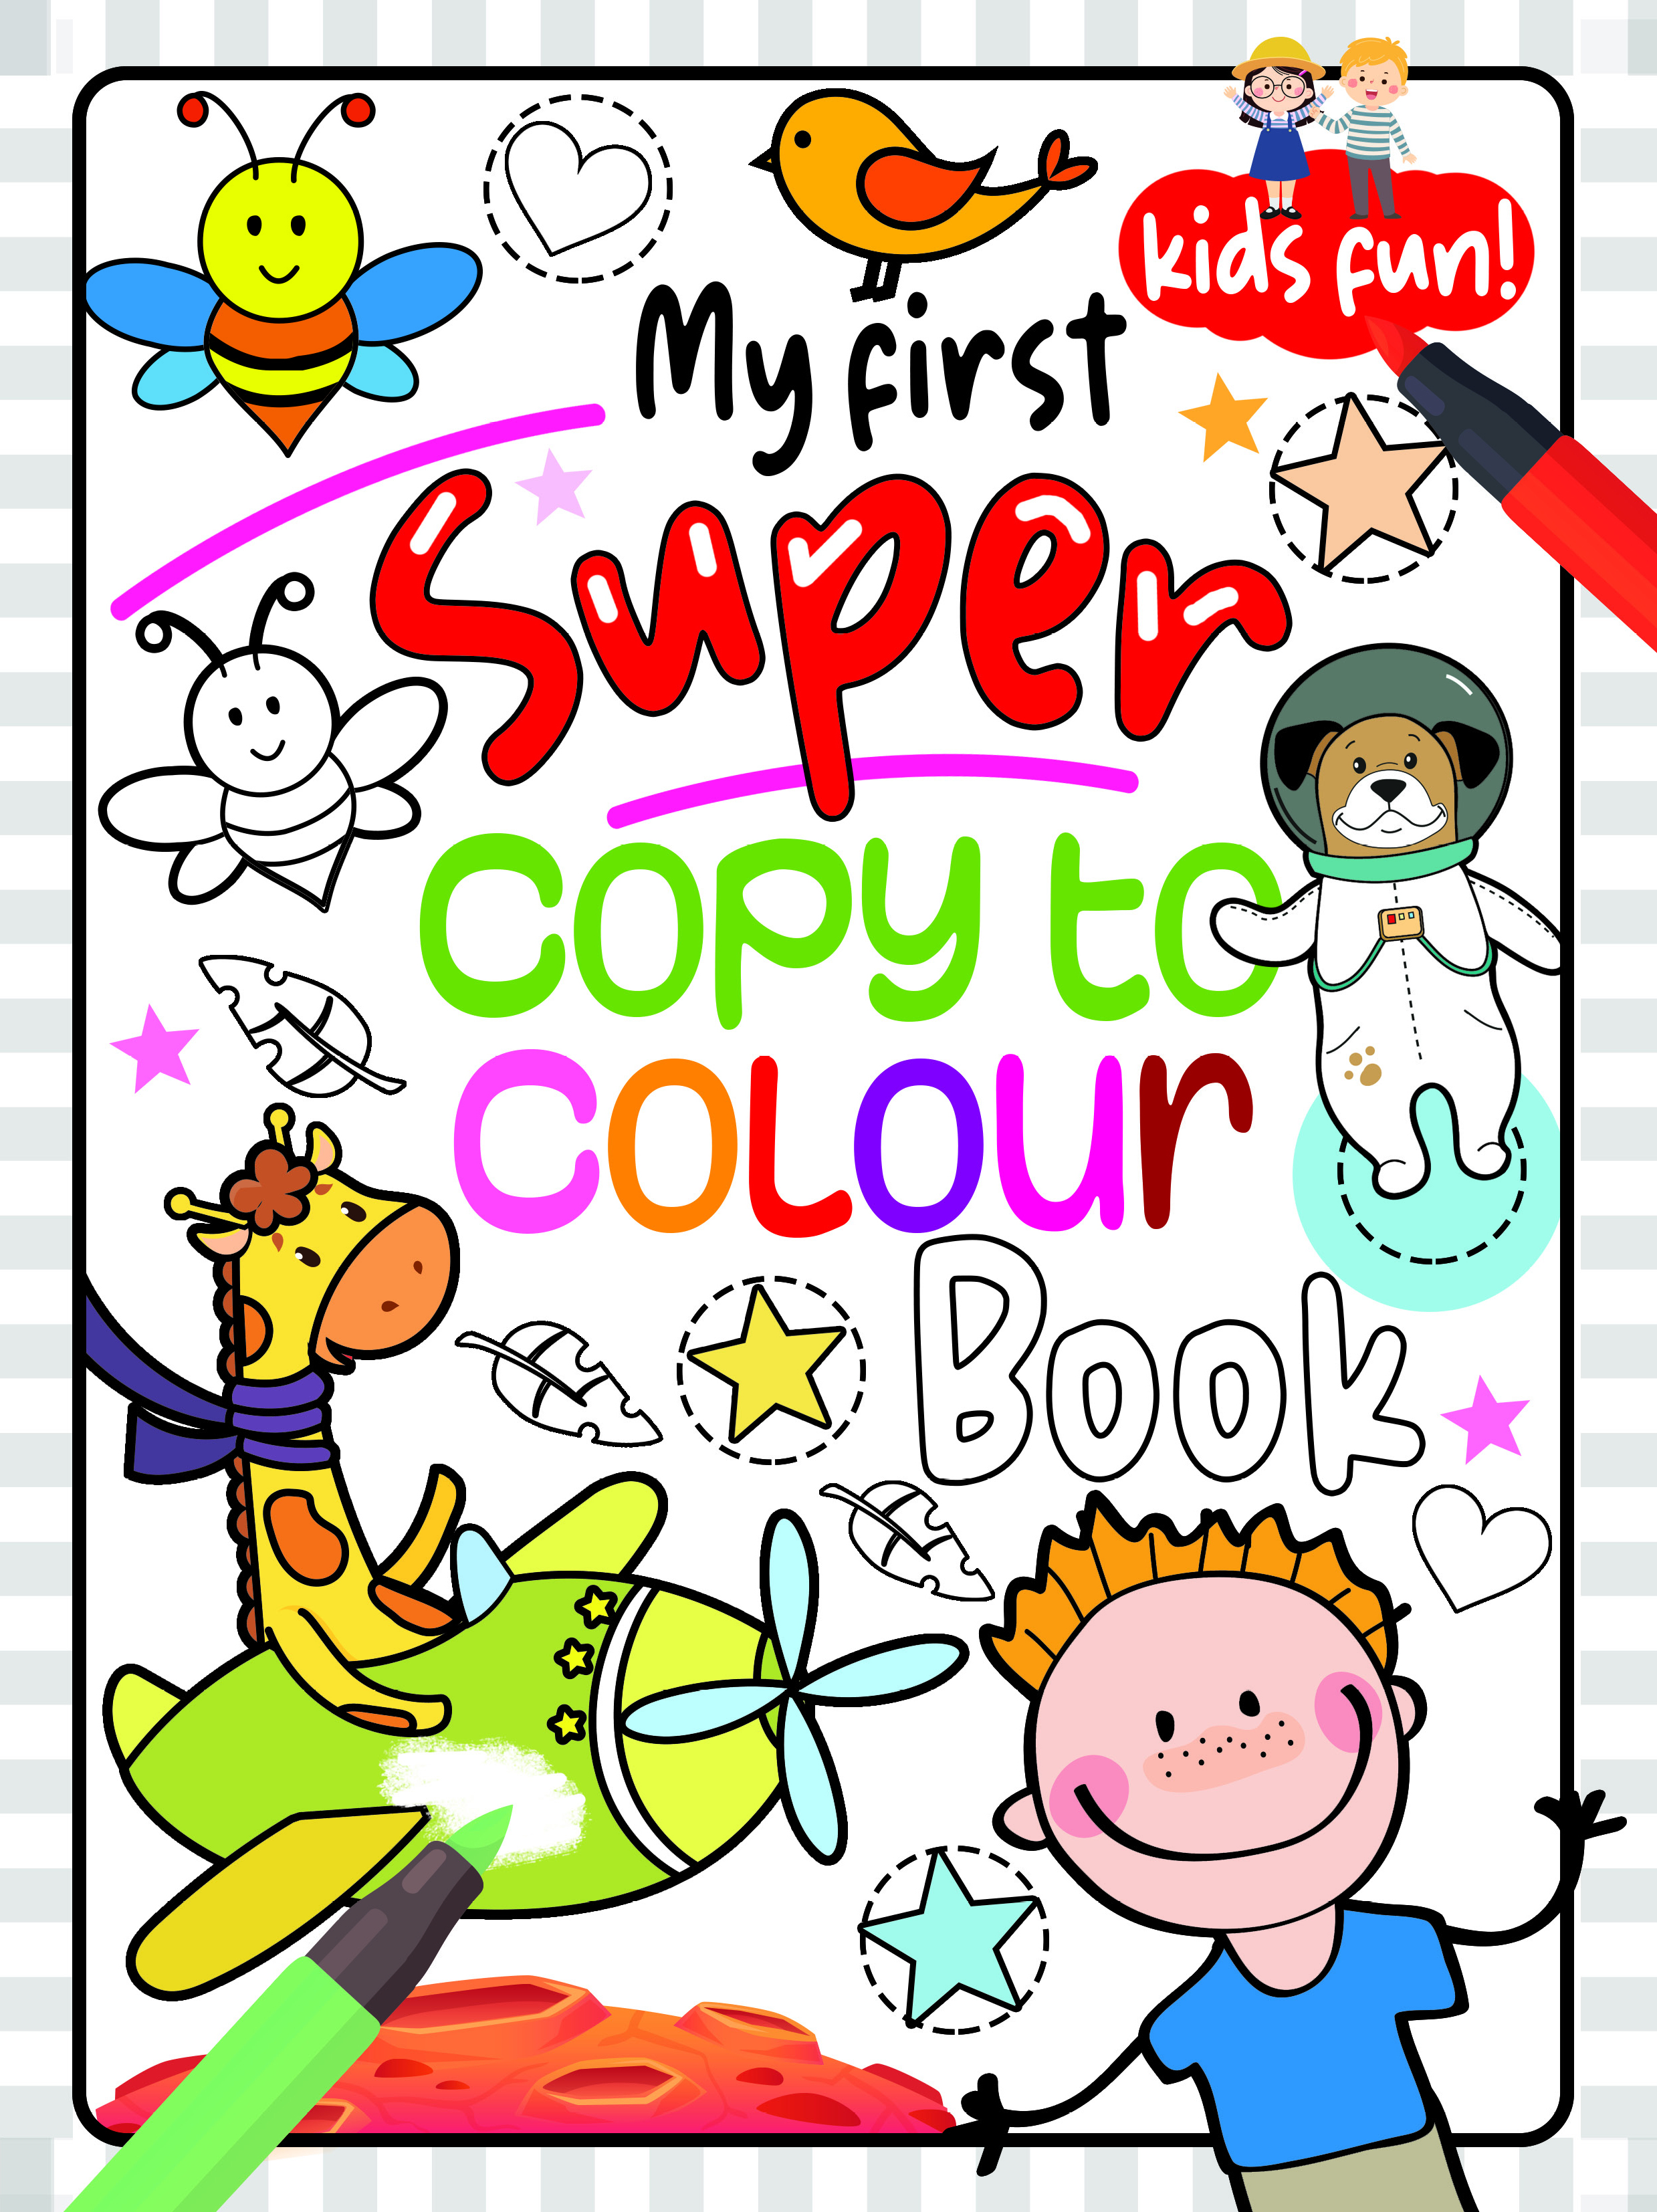 Easy Colour - Cool Copy Colouring Super 2